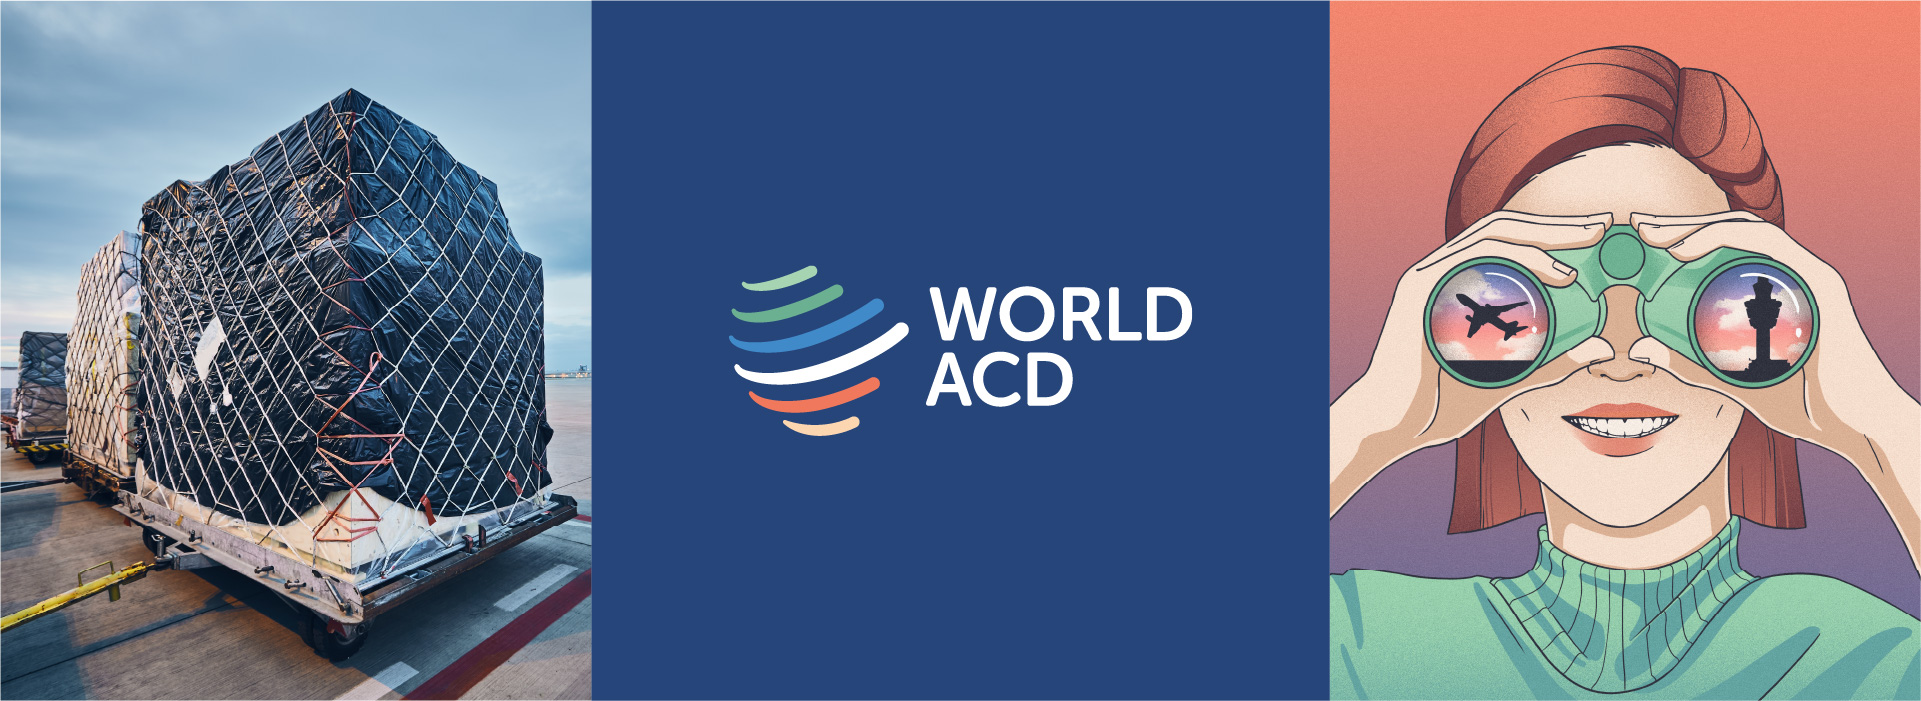 Revitalize lanceert rebranding WorldACD